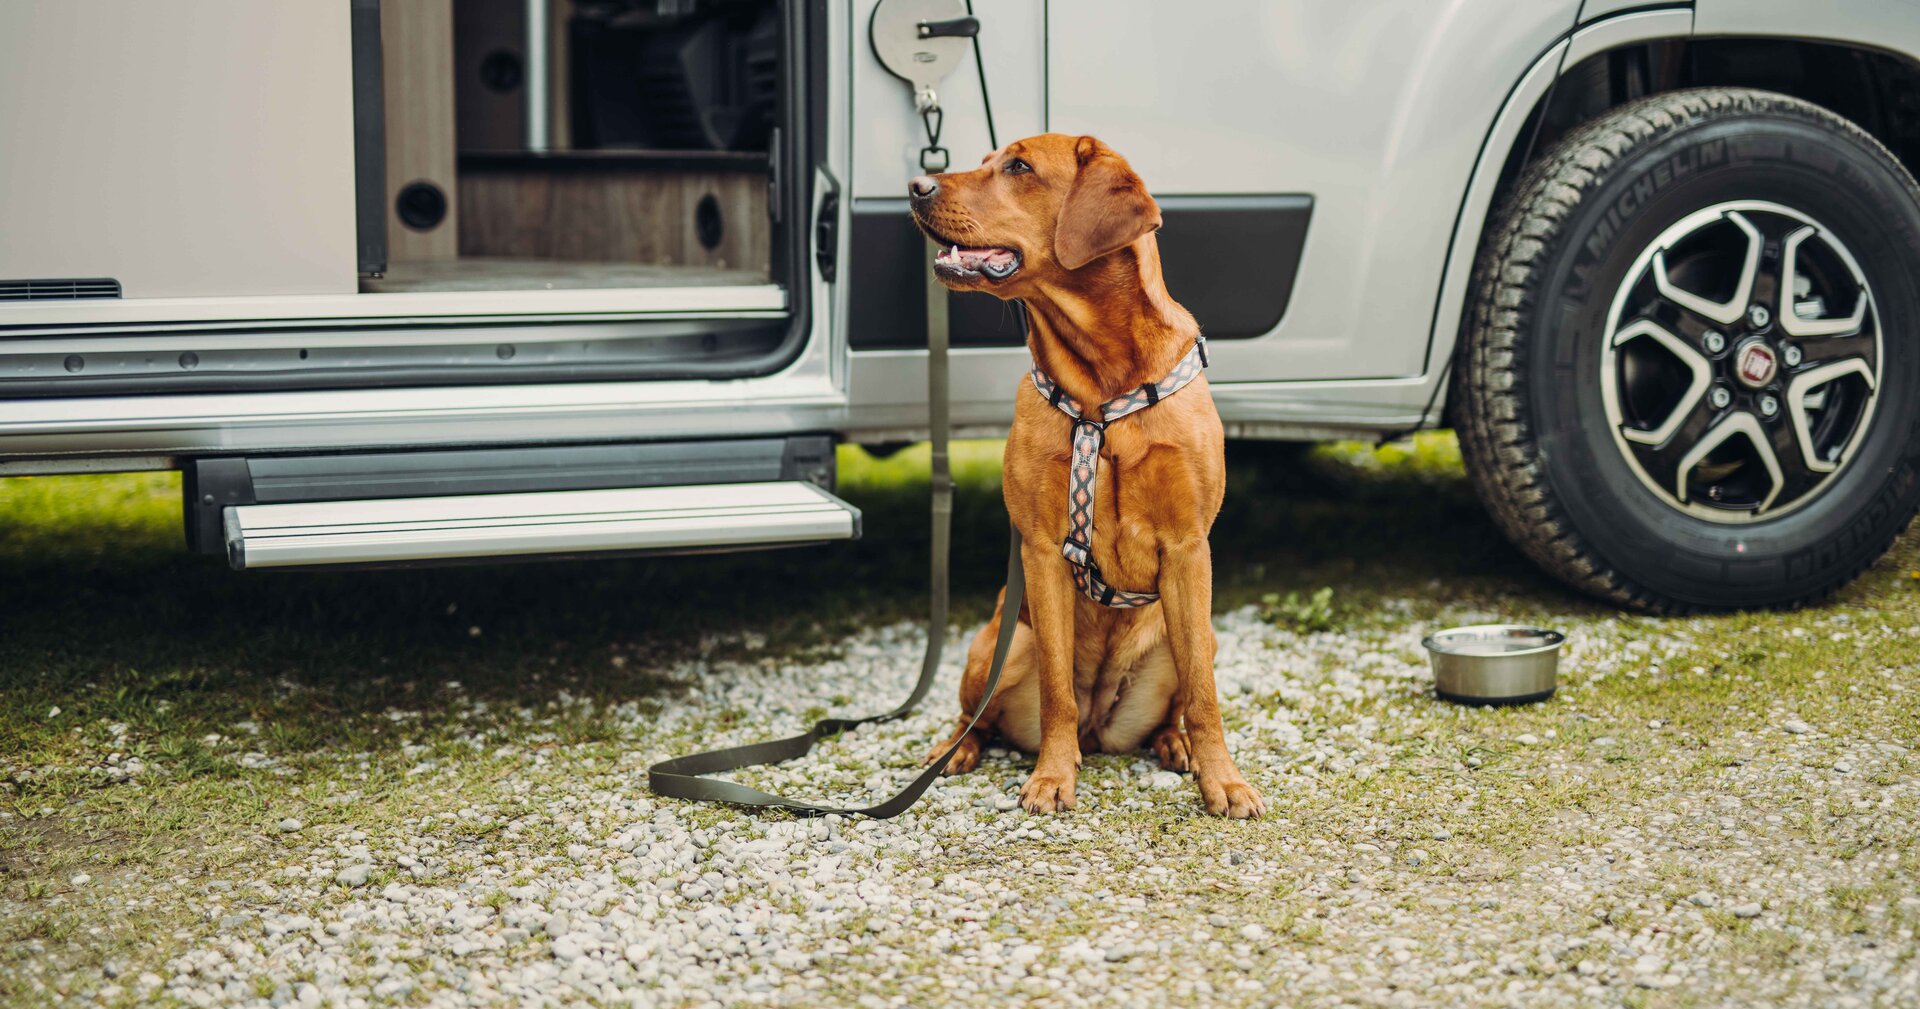 Sociale Studier Bliv Verdensvindue Campingferie i en Carado autocamper med hunde. | Carado